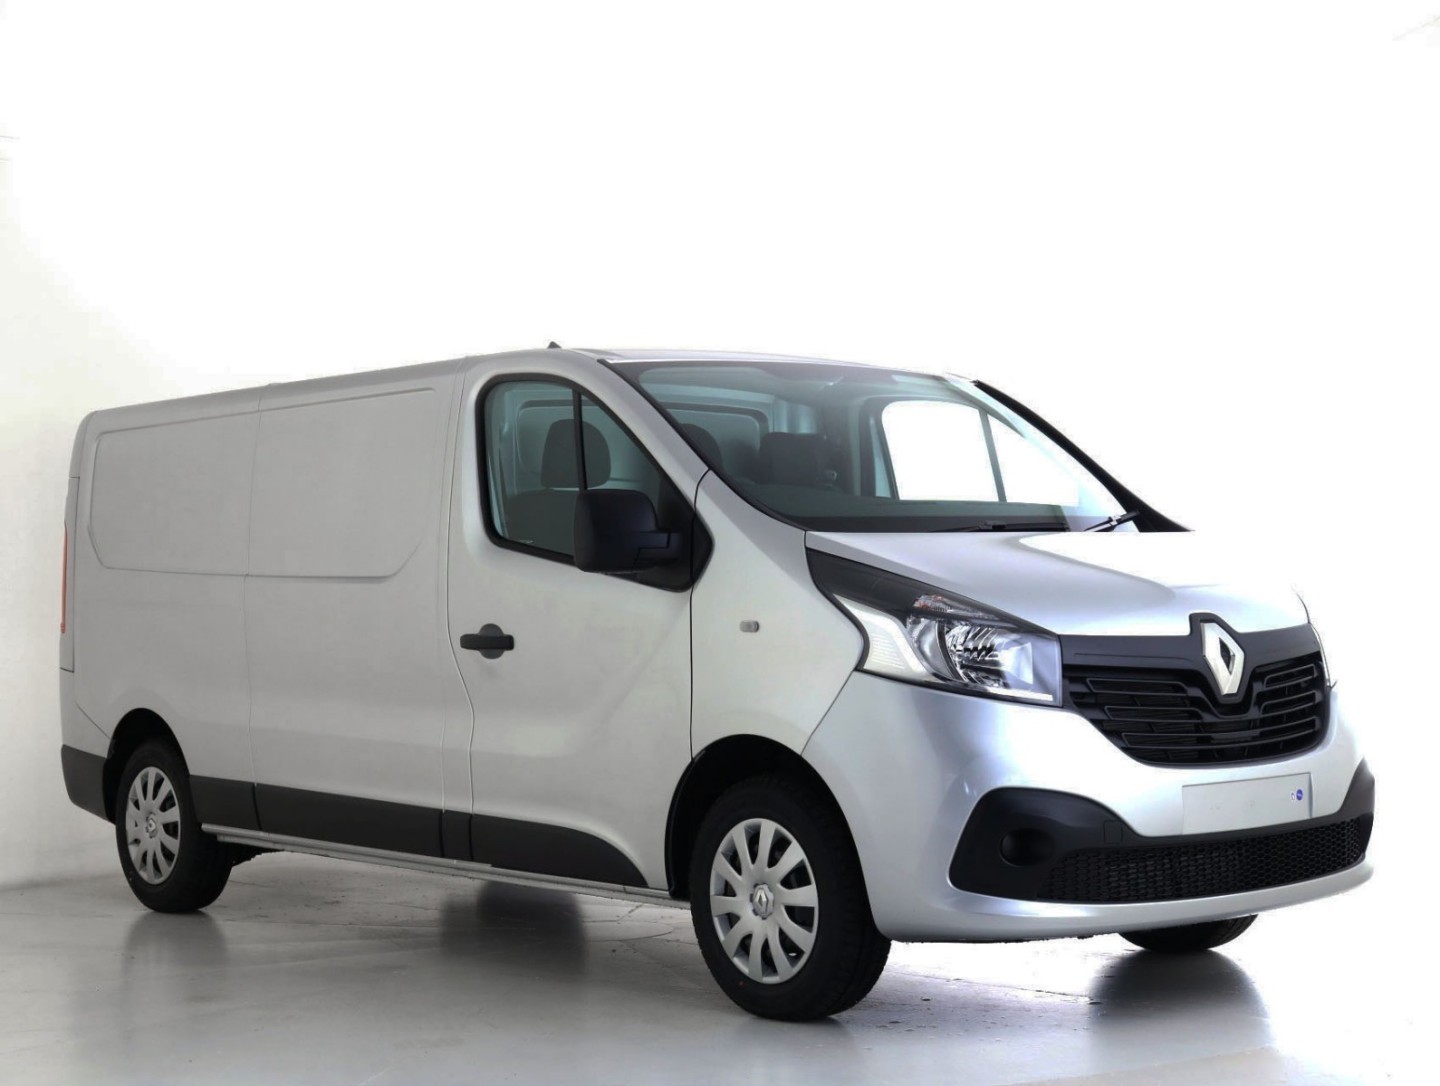 Renault Trafic Van Review ¦ All Specs ¦ 2022